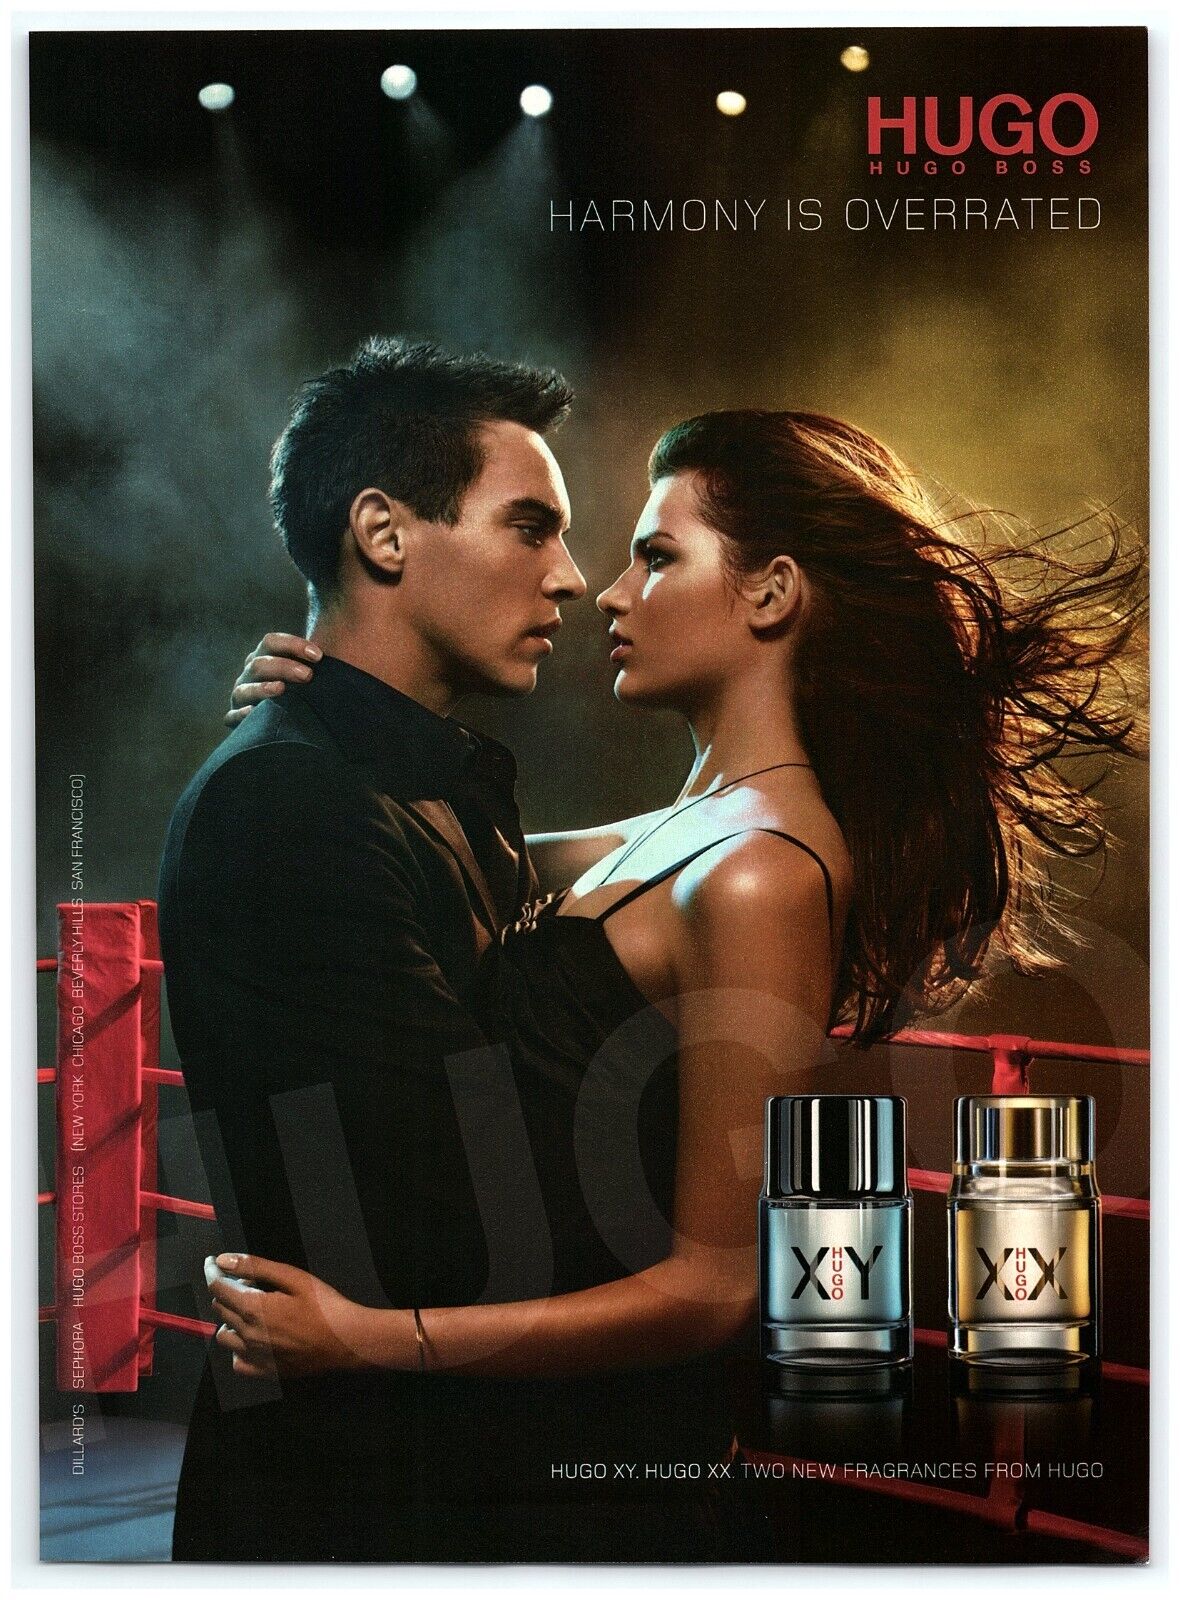 2007 Hugo Boss Fragrance Print Ad, Hugo XY & XX Harmony Is Overrated Dance Ring